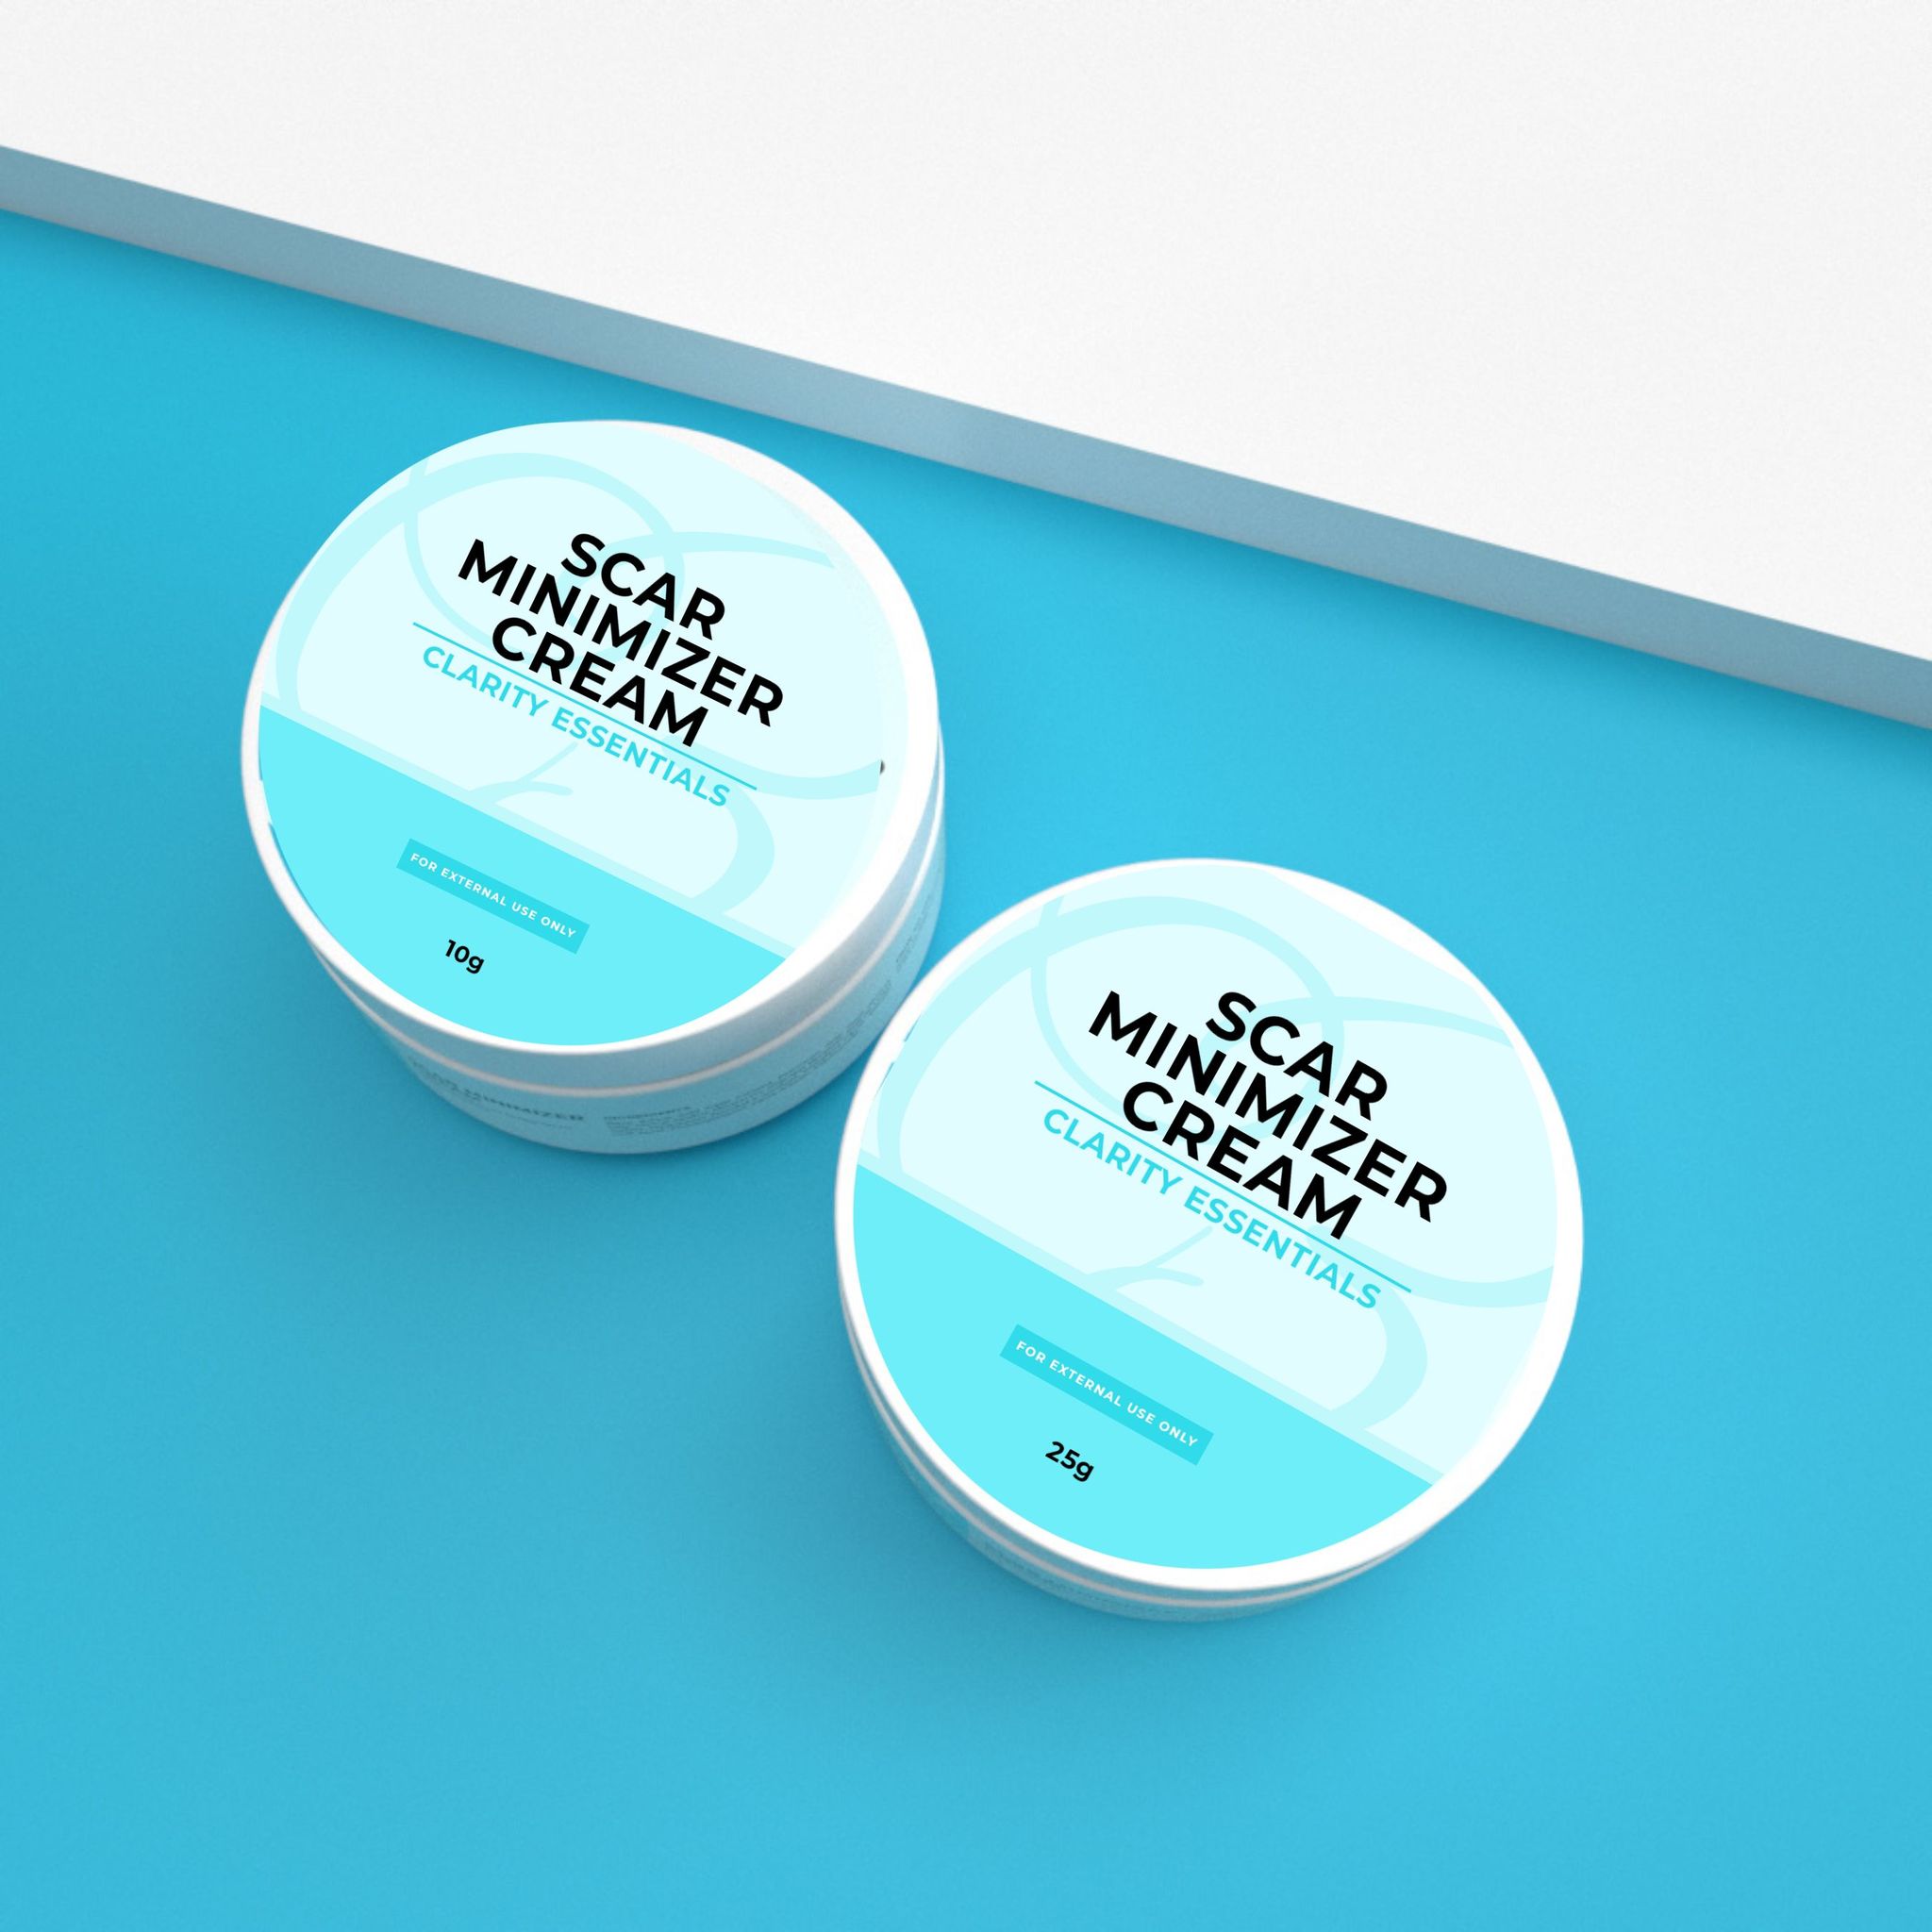 Scar Minimizer Cream by Clarity Essentials 💙#scarcream